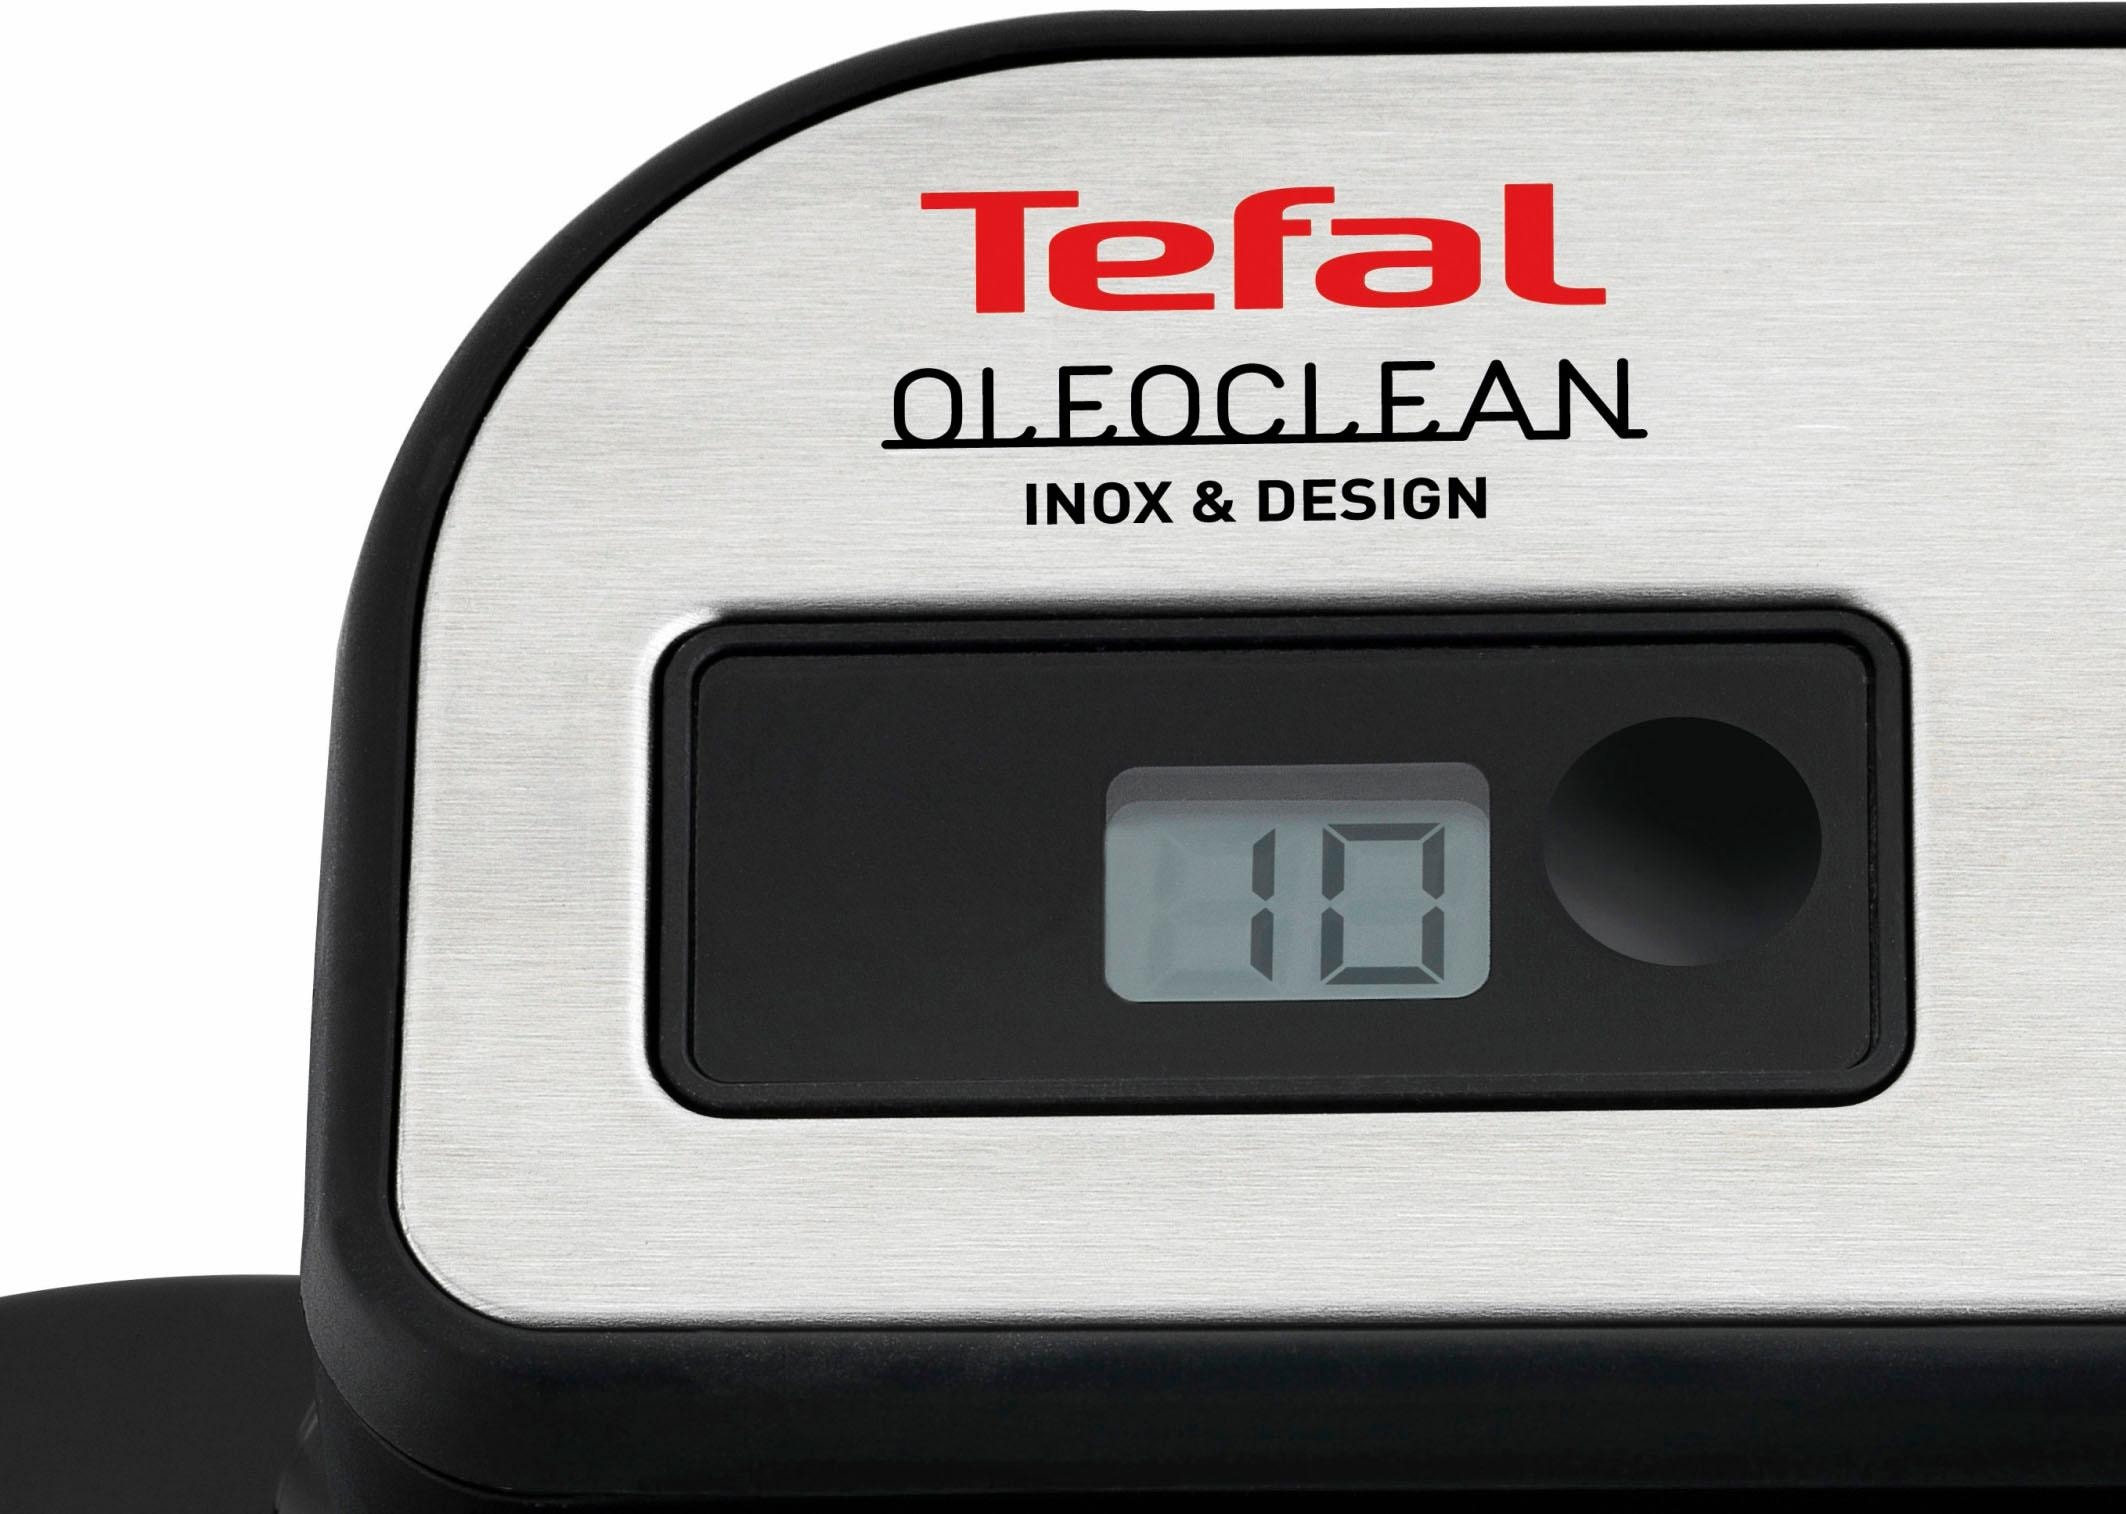 Tefal Kaltzonenfritteuse »FR8040 Oleoclean Pro Inox & Design«, 2300 W, 1,2 kg, herausnehmbarer Ölbehälter, automatische Öl/Fett Filterung